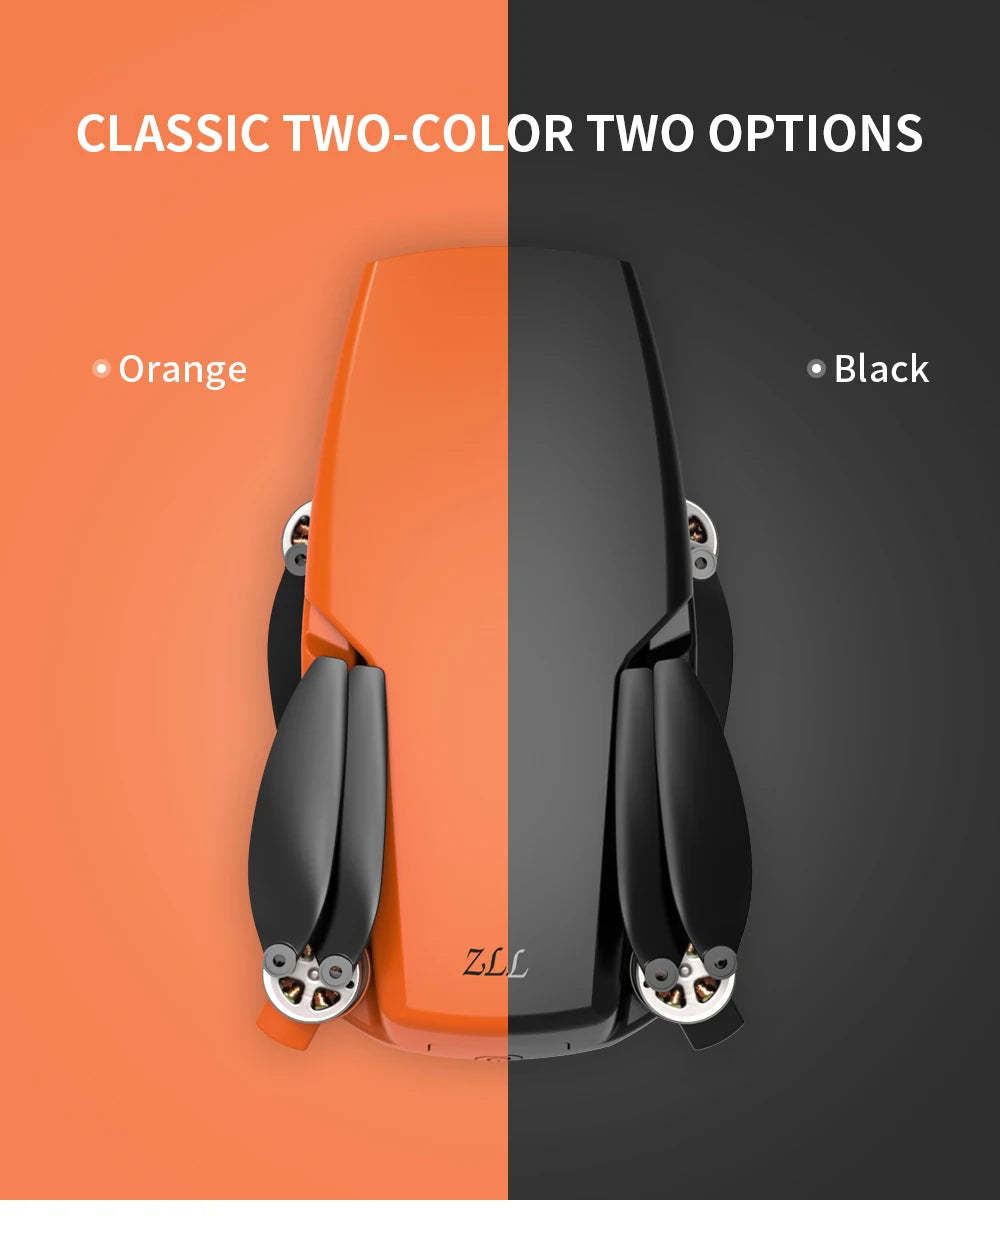 ZLL SG108 Pro Drone, CLASSIC TWO-COLOR TWO OPTIONS Orange Black Z